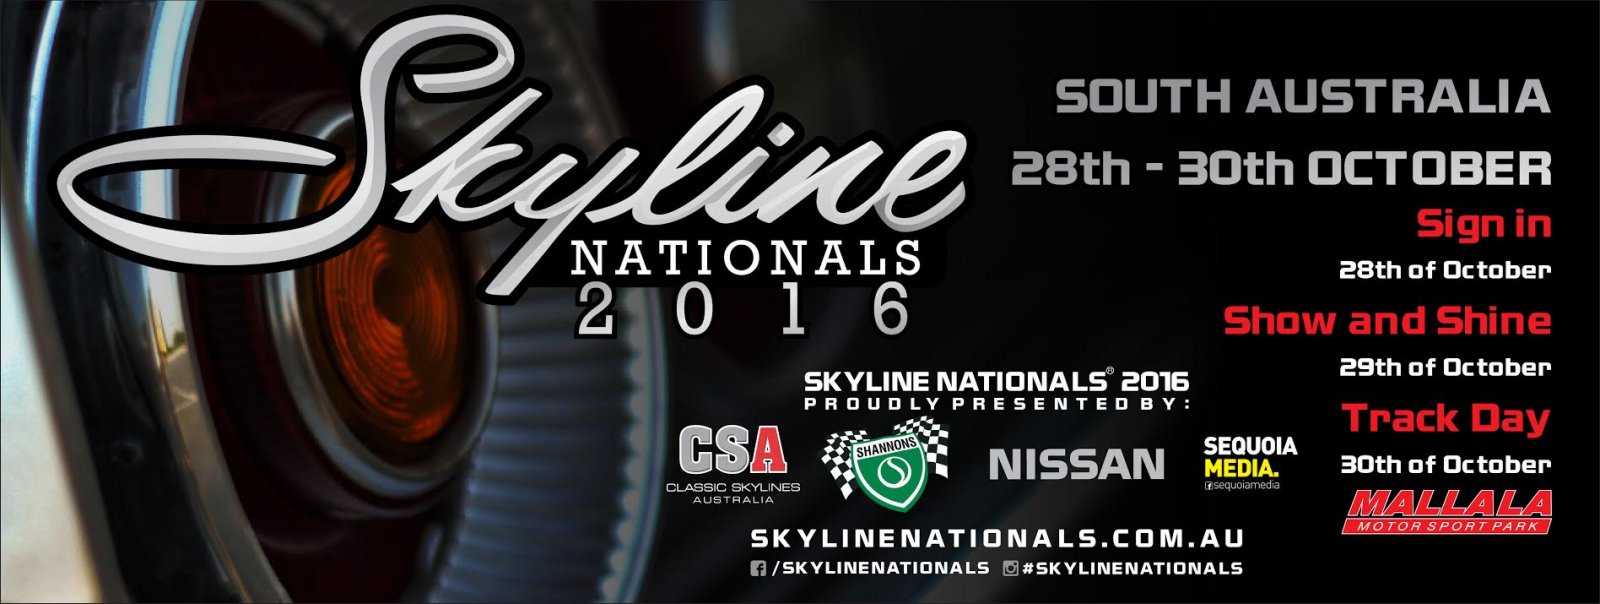 Skyline Nationals 2016